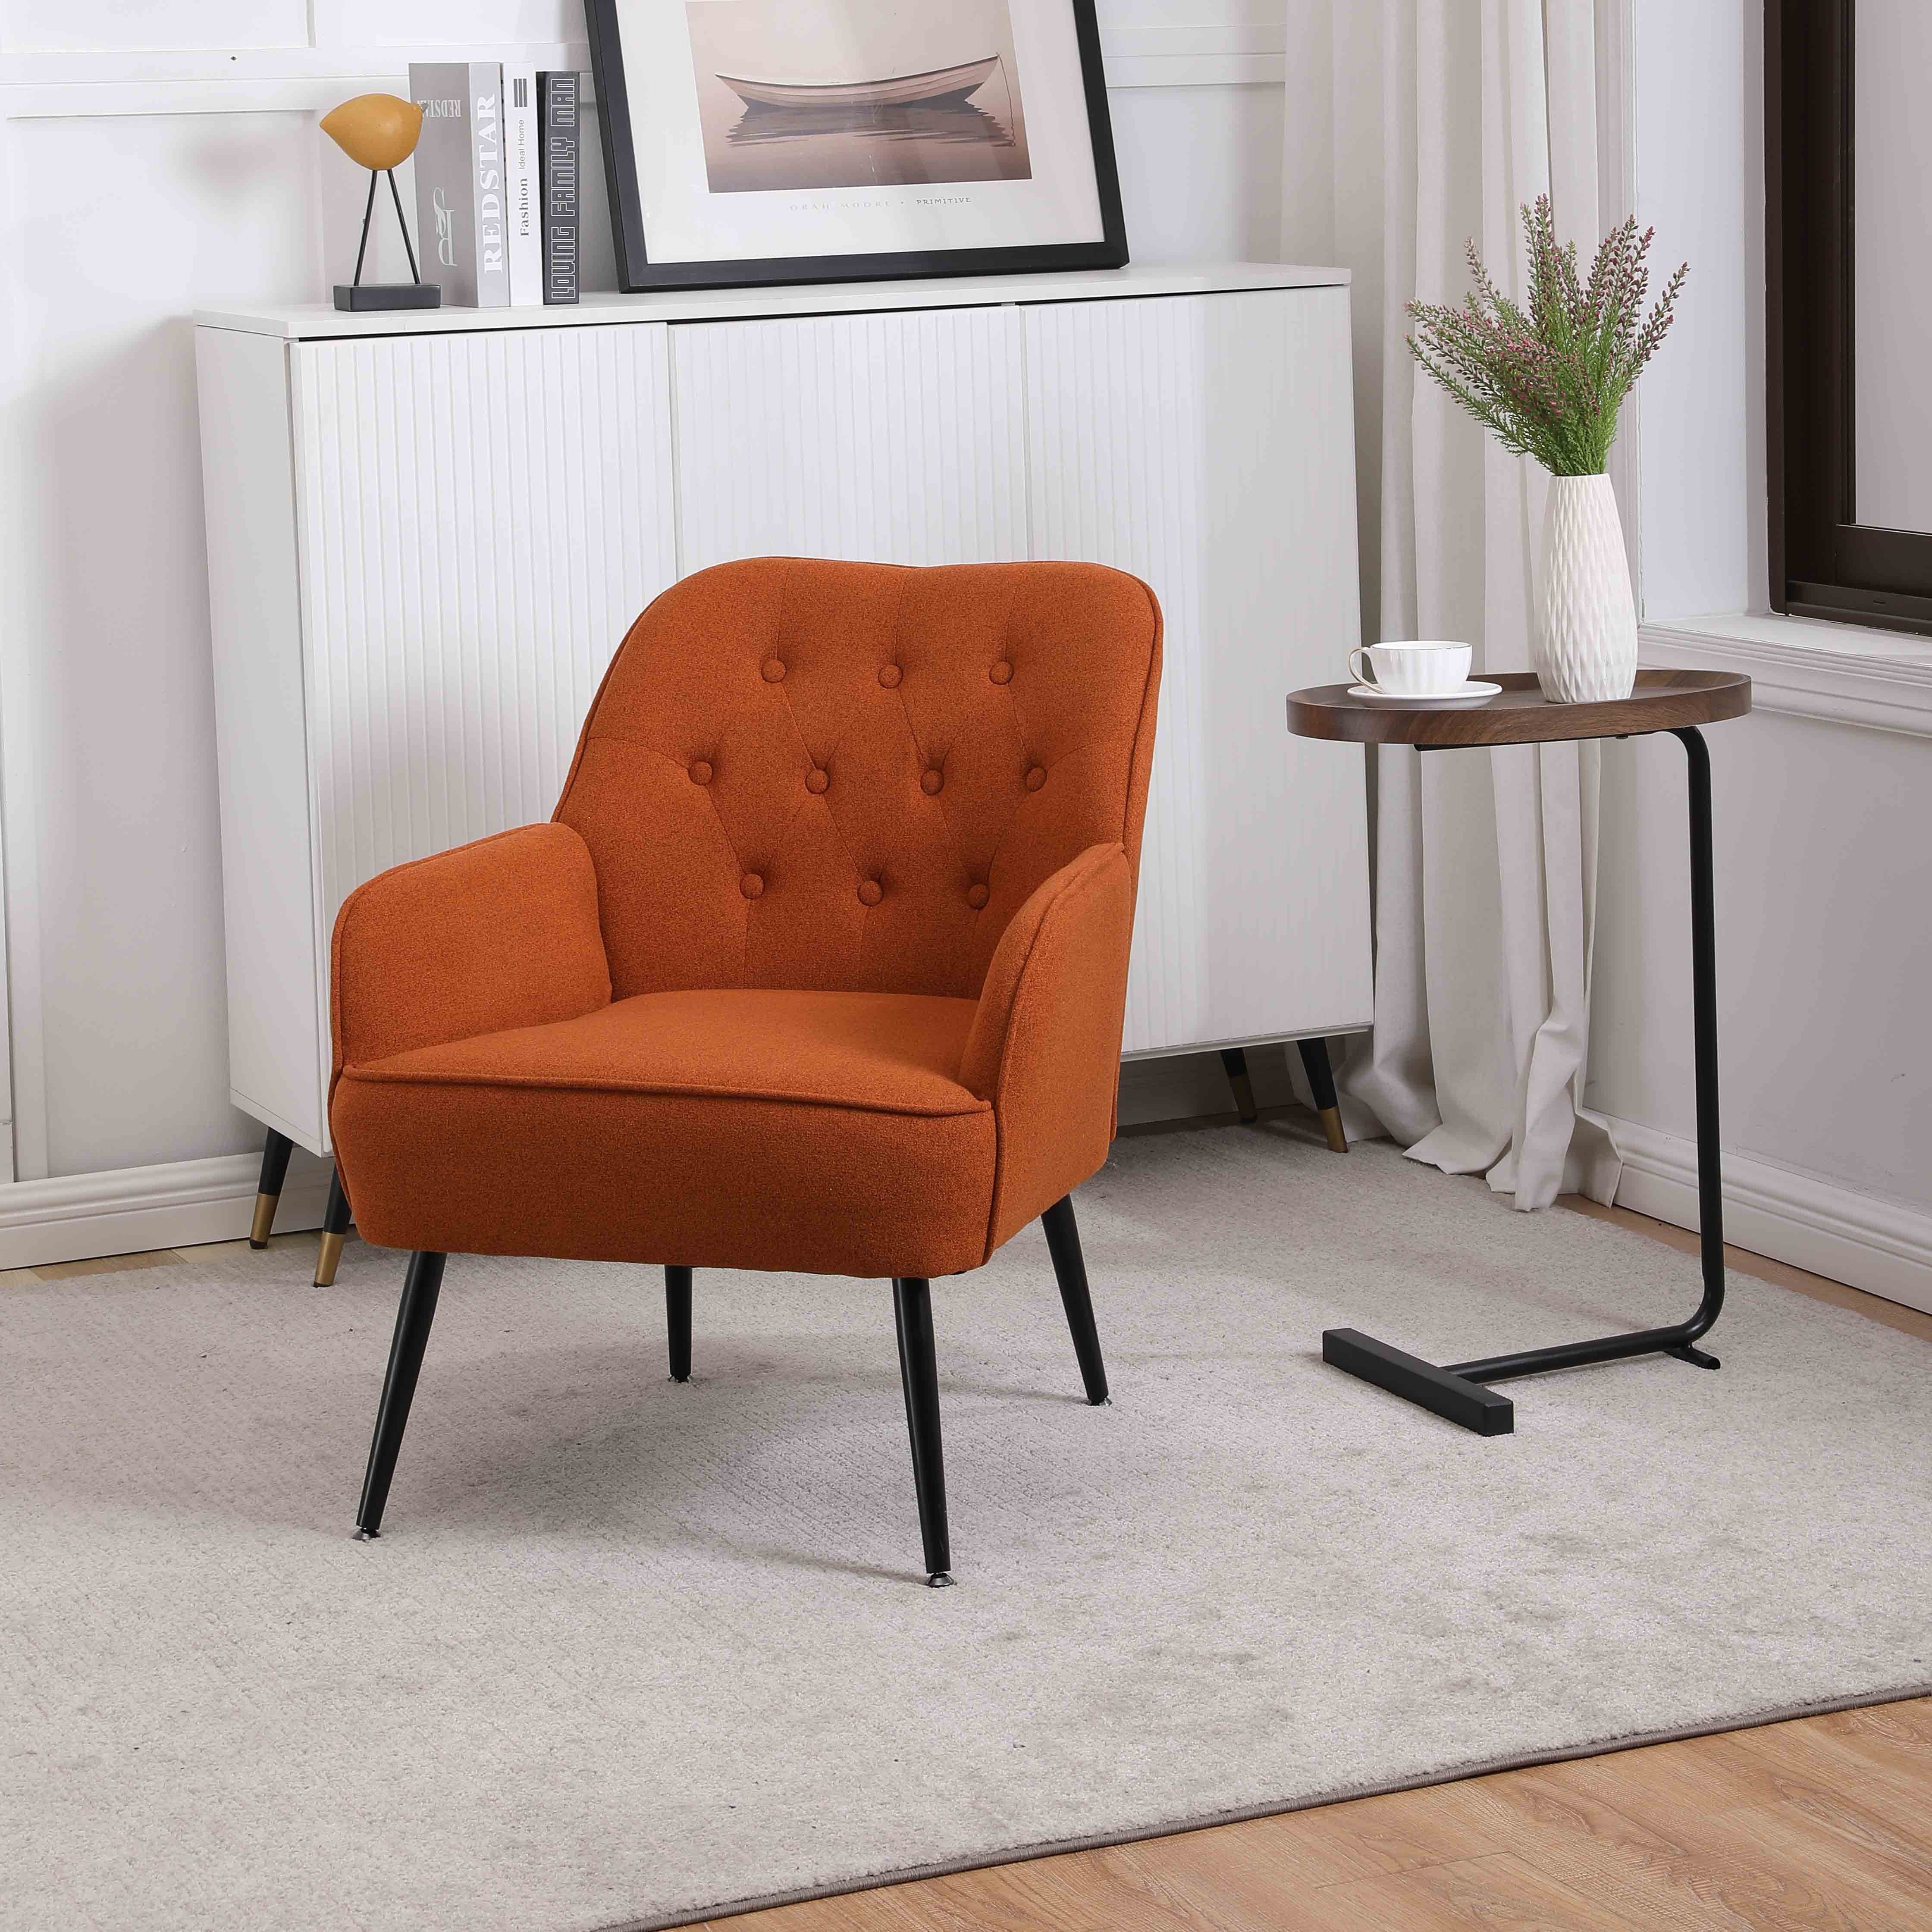 WISHDOR Loungesessel Polstersessel Relaxsessel Einzelsessel, Gepolsterte Einzelsofa Stuhl (Büro Freizeit Gepolsterte Einzelsofa Stuhl), Kaffee Stuhl mit Metallbeinen orange